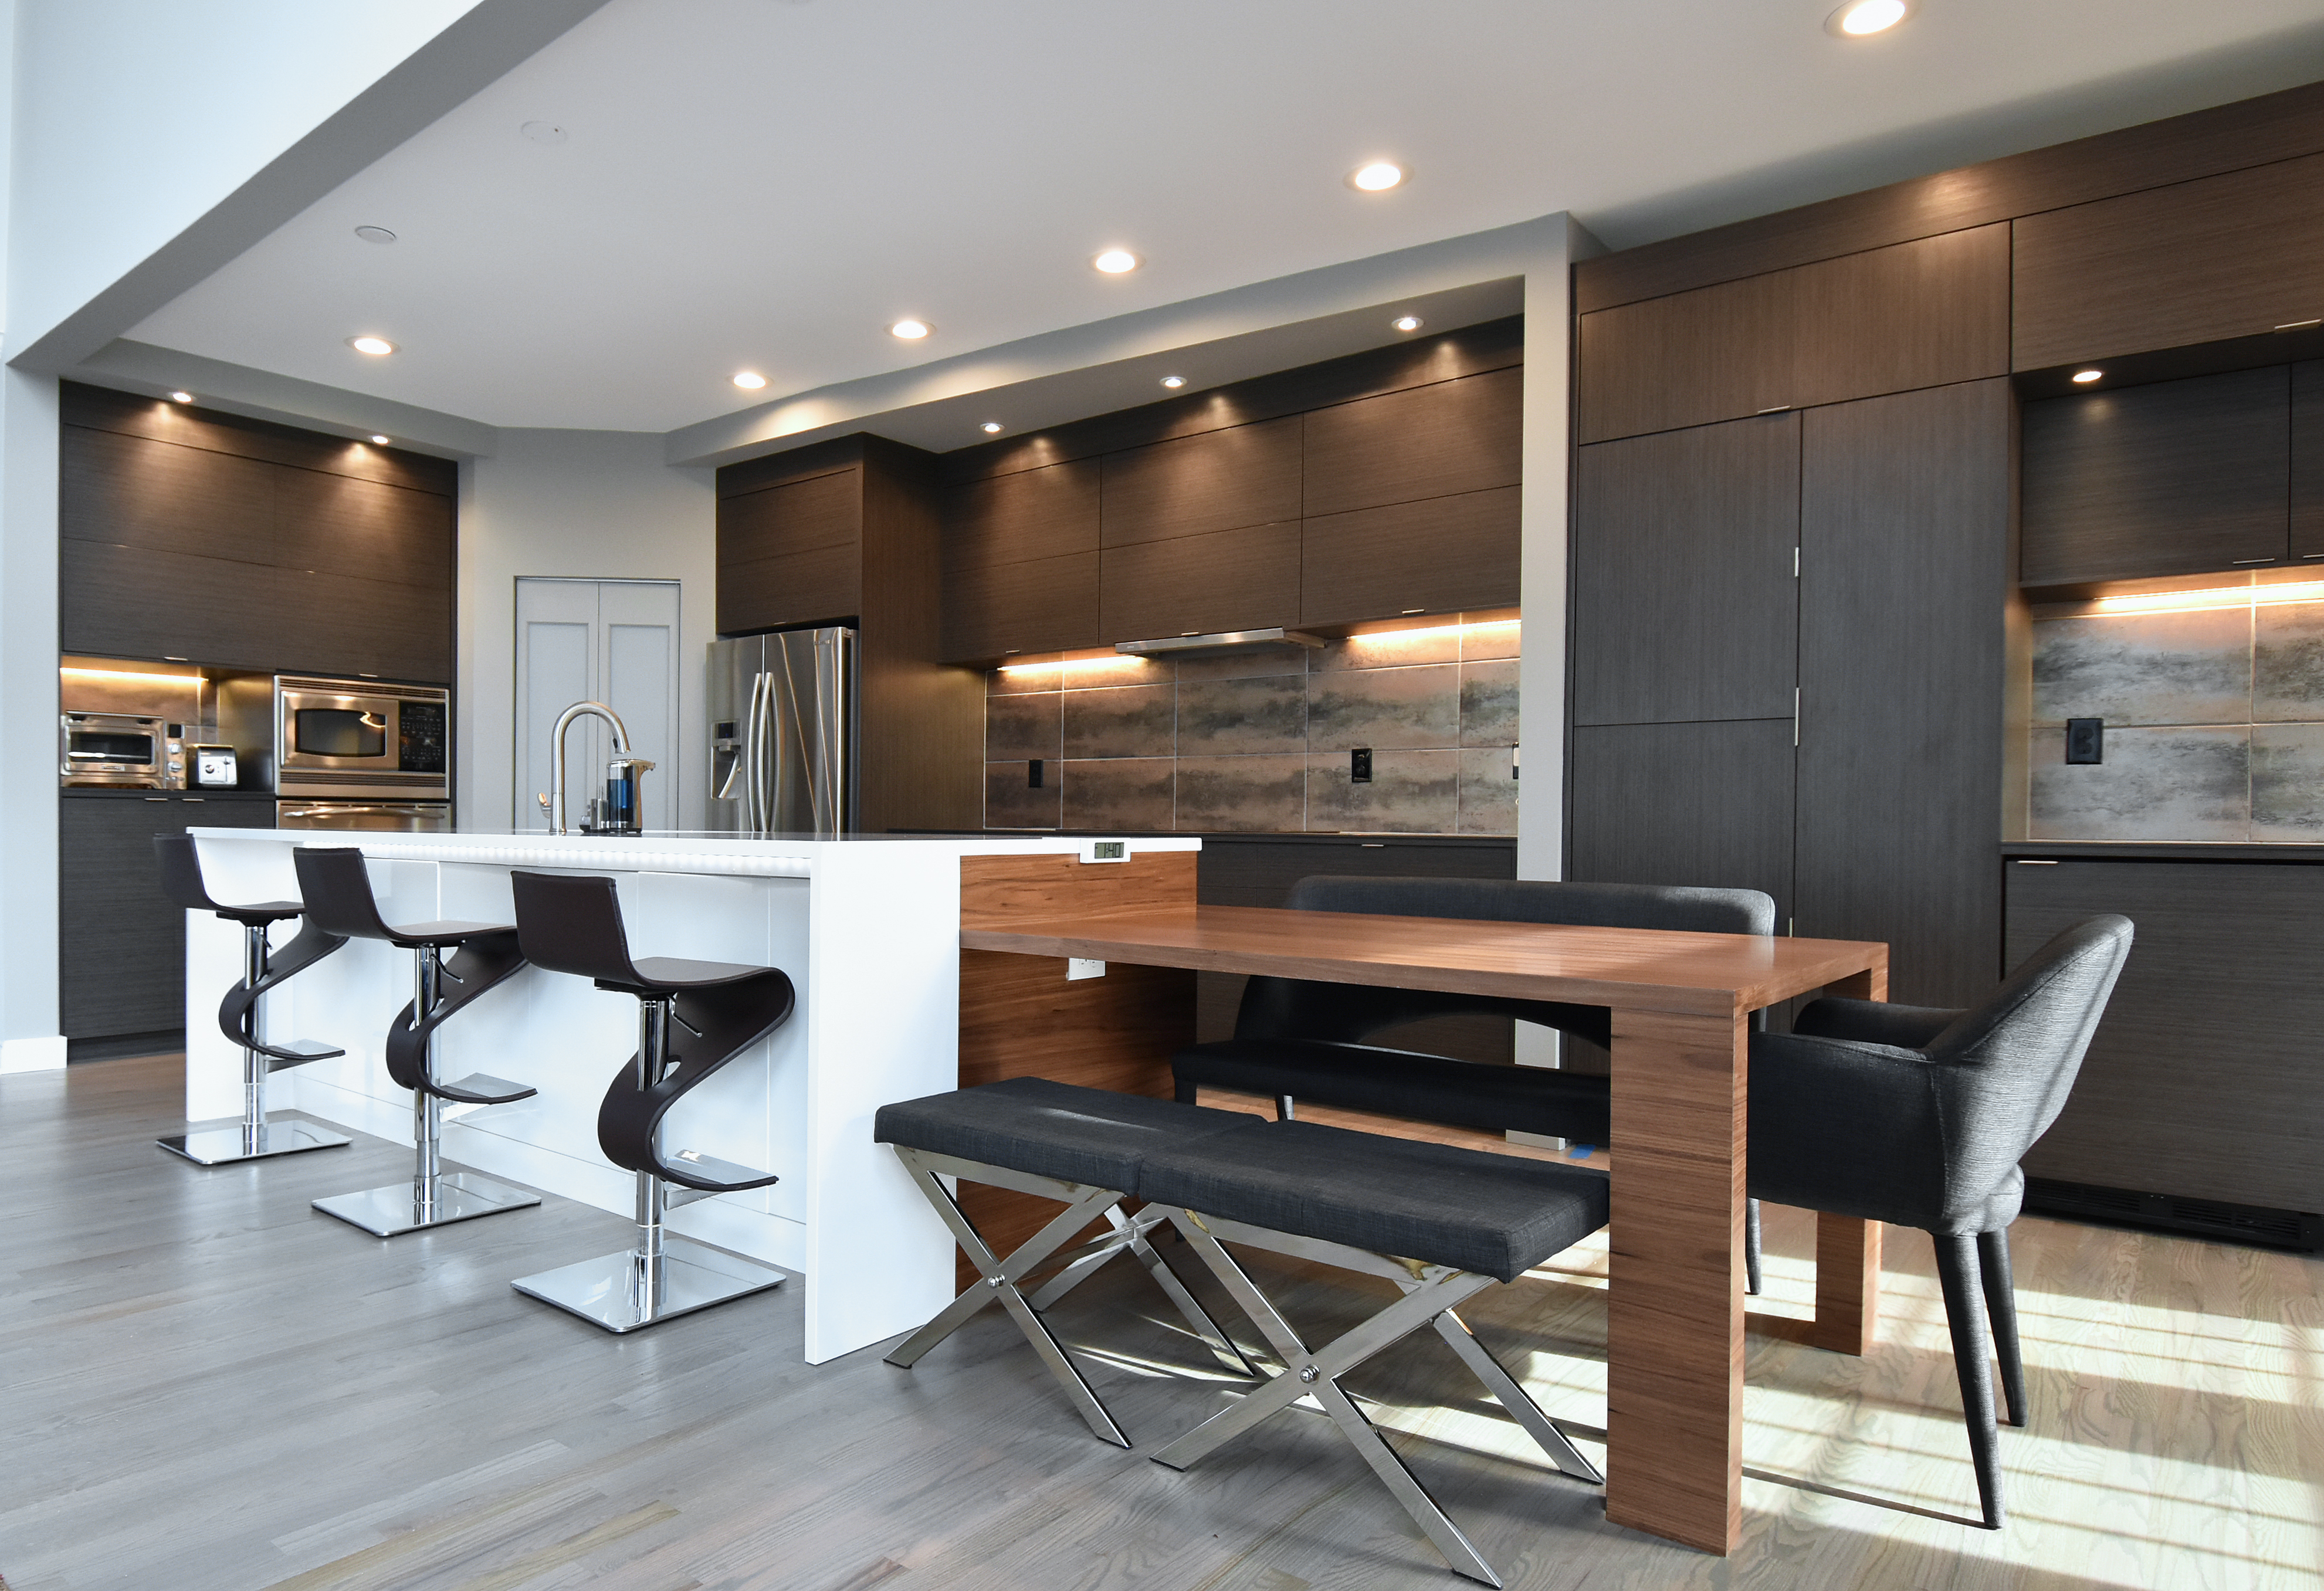 Residential Remodel/Custom Kitchen, Charlotte NC | FreeSpace Design